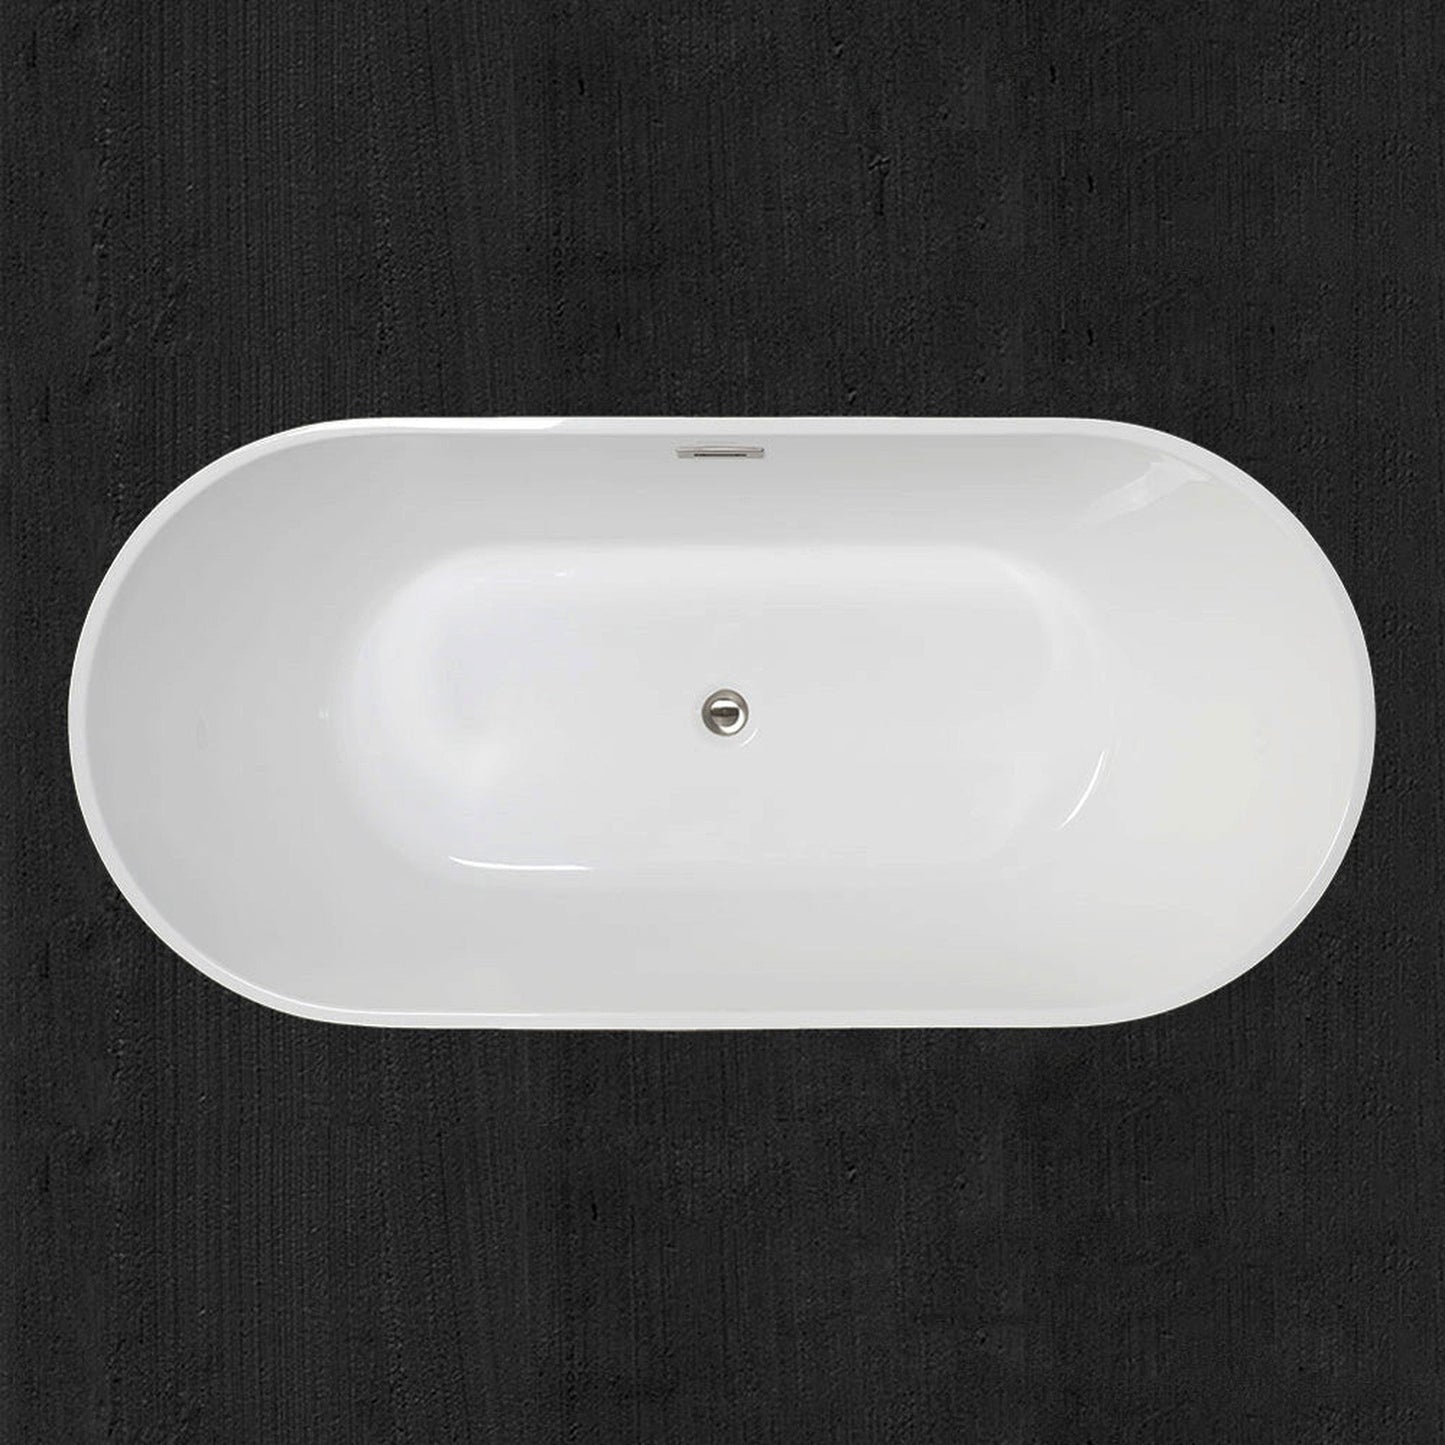 WoodBridge B0014 59" White Acrylic Freestanding Soaking Bathtub With Chrome Drain, Overflow, F-0013 Tub Filler and Caddy Tray